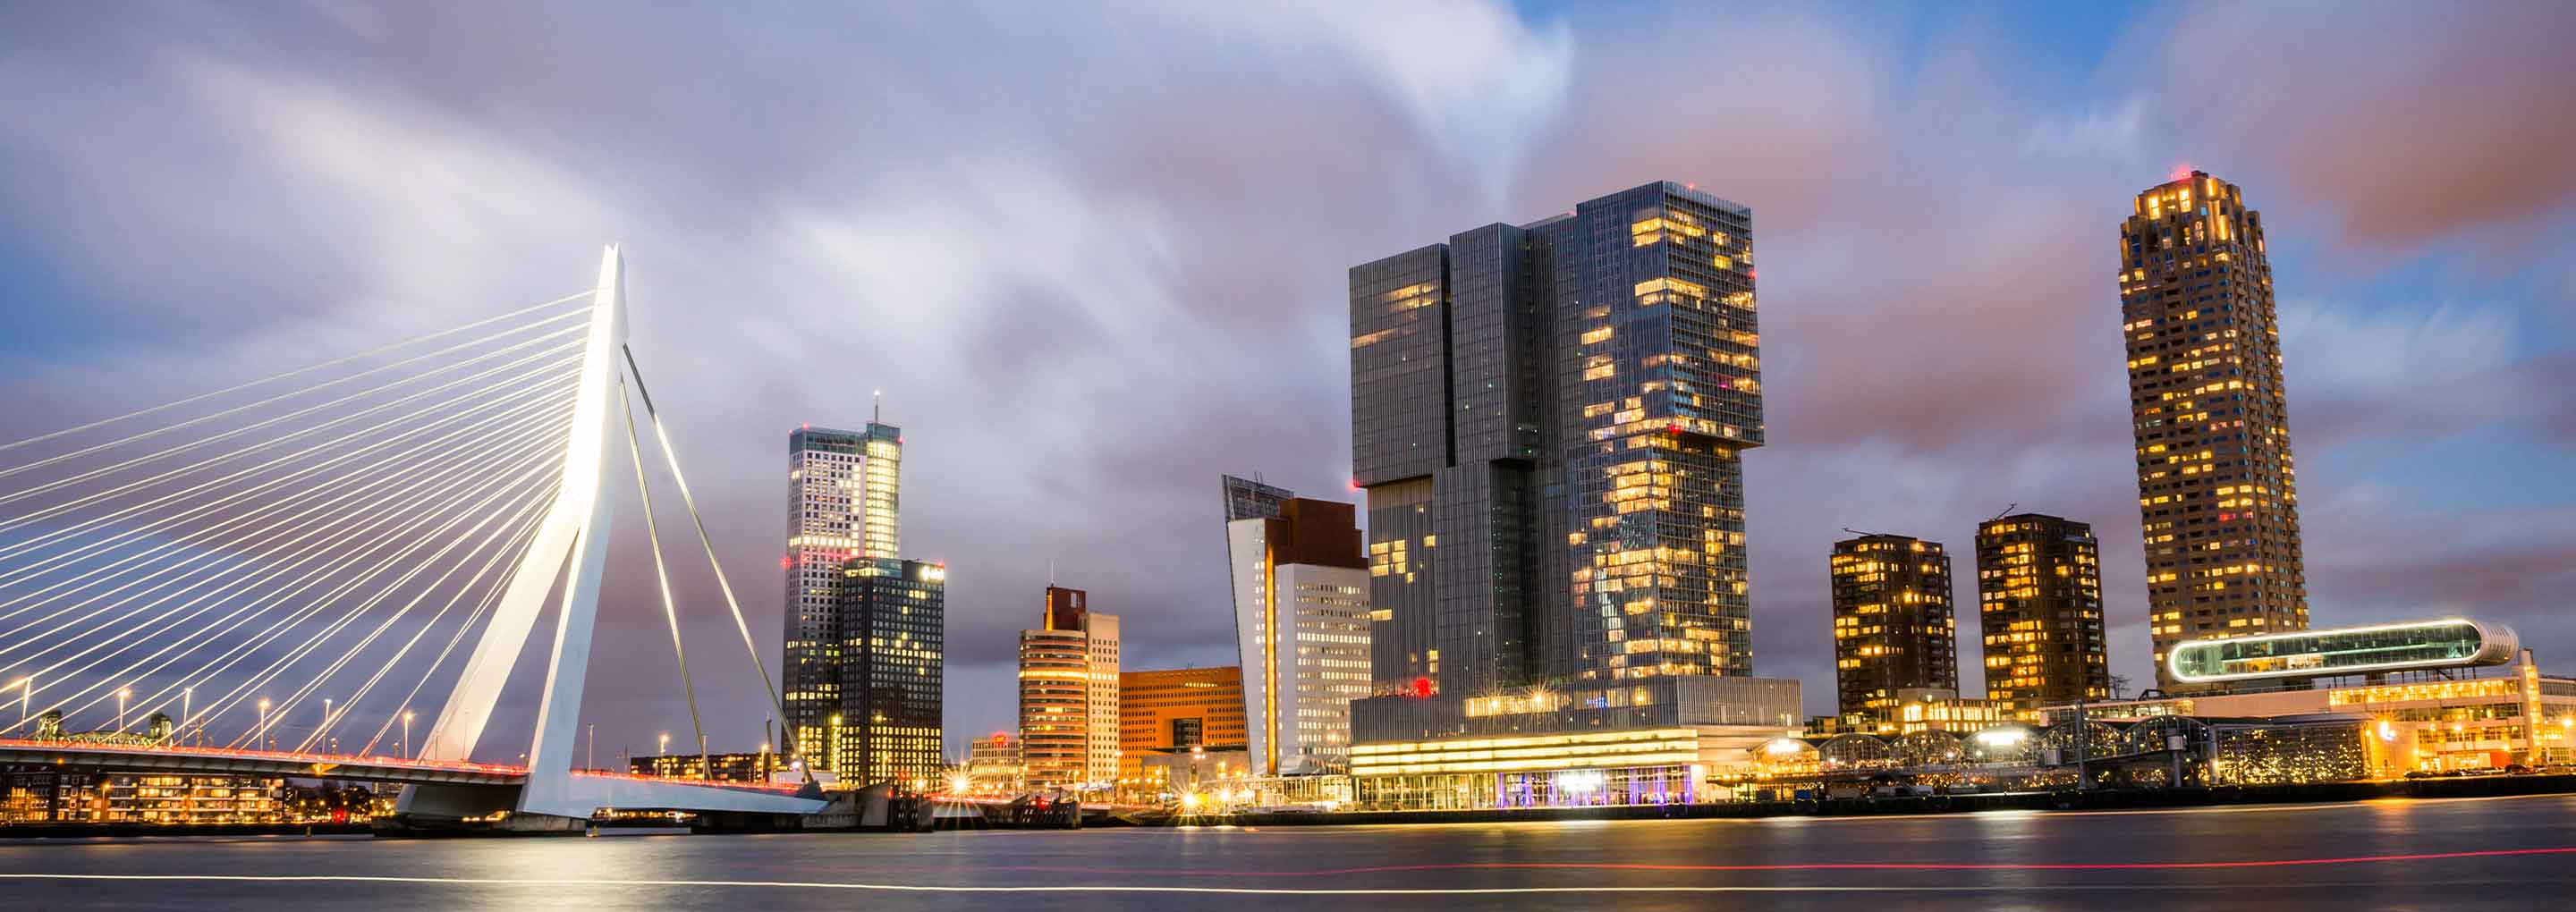 Skyline of Rotterdam with the Erasmus Bridge and De Rotterdam.